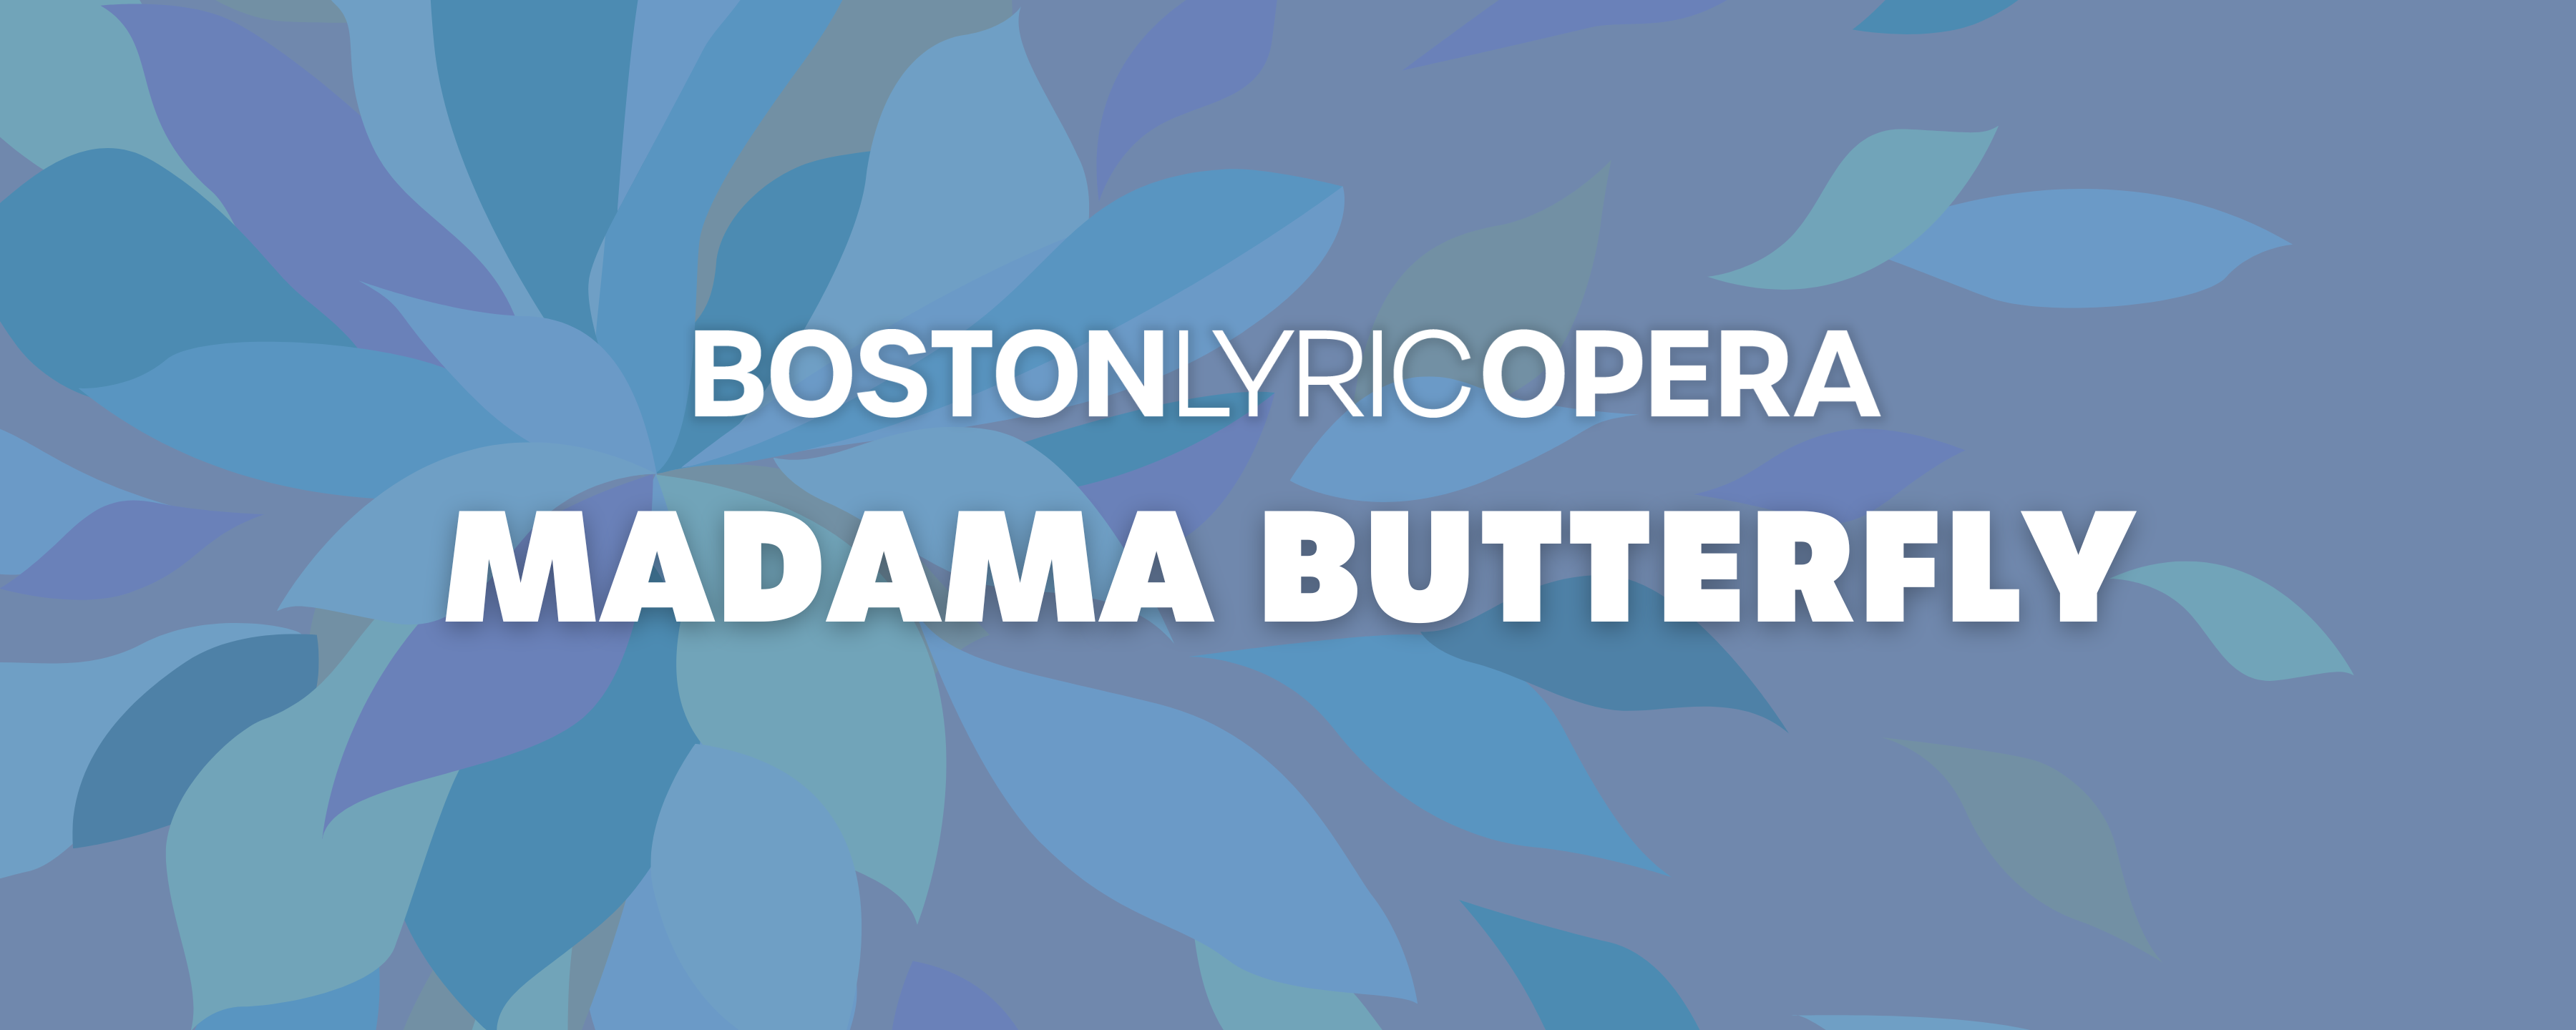 Madama Butterfly' is a poignant American tragedy at Boston Lyric